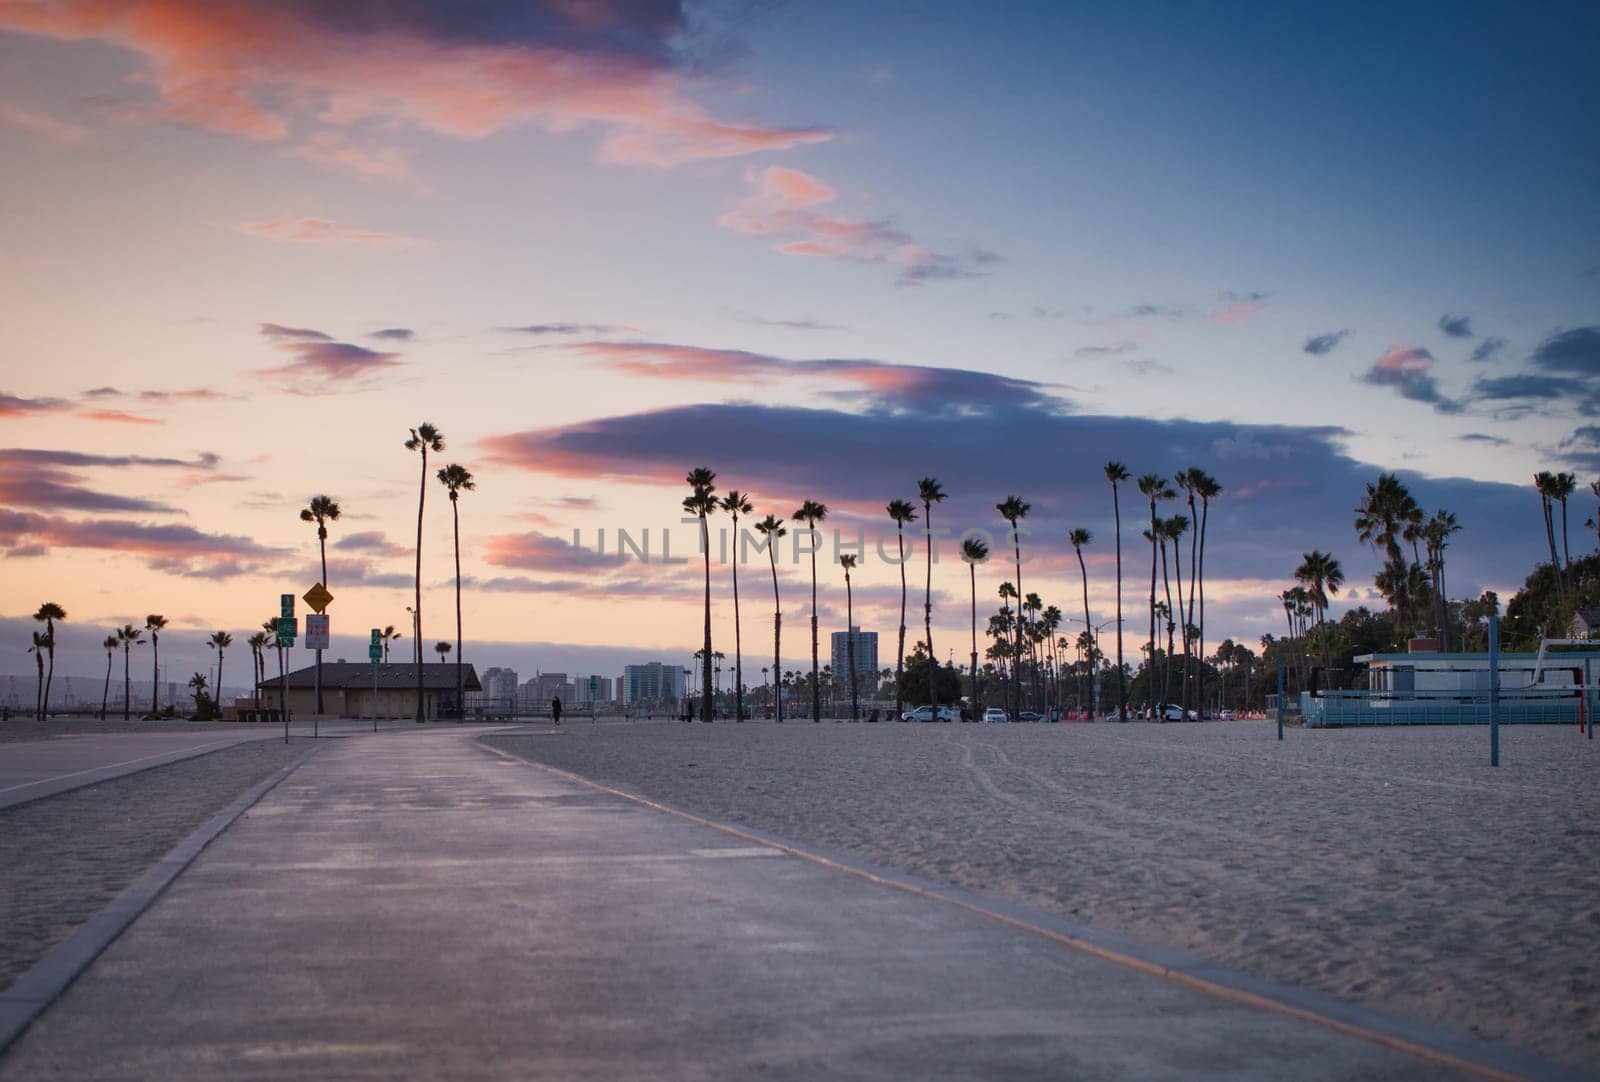 Palm trees line the beach as the sun sets